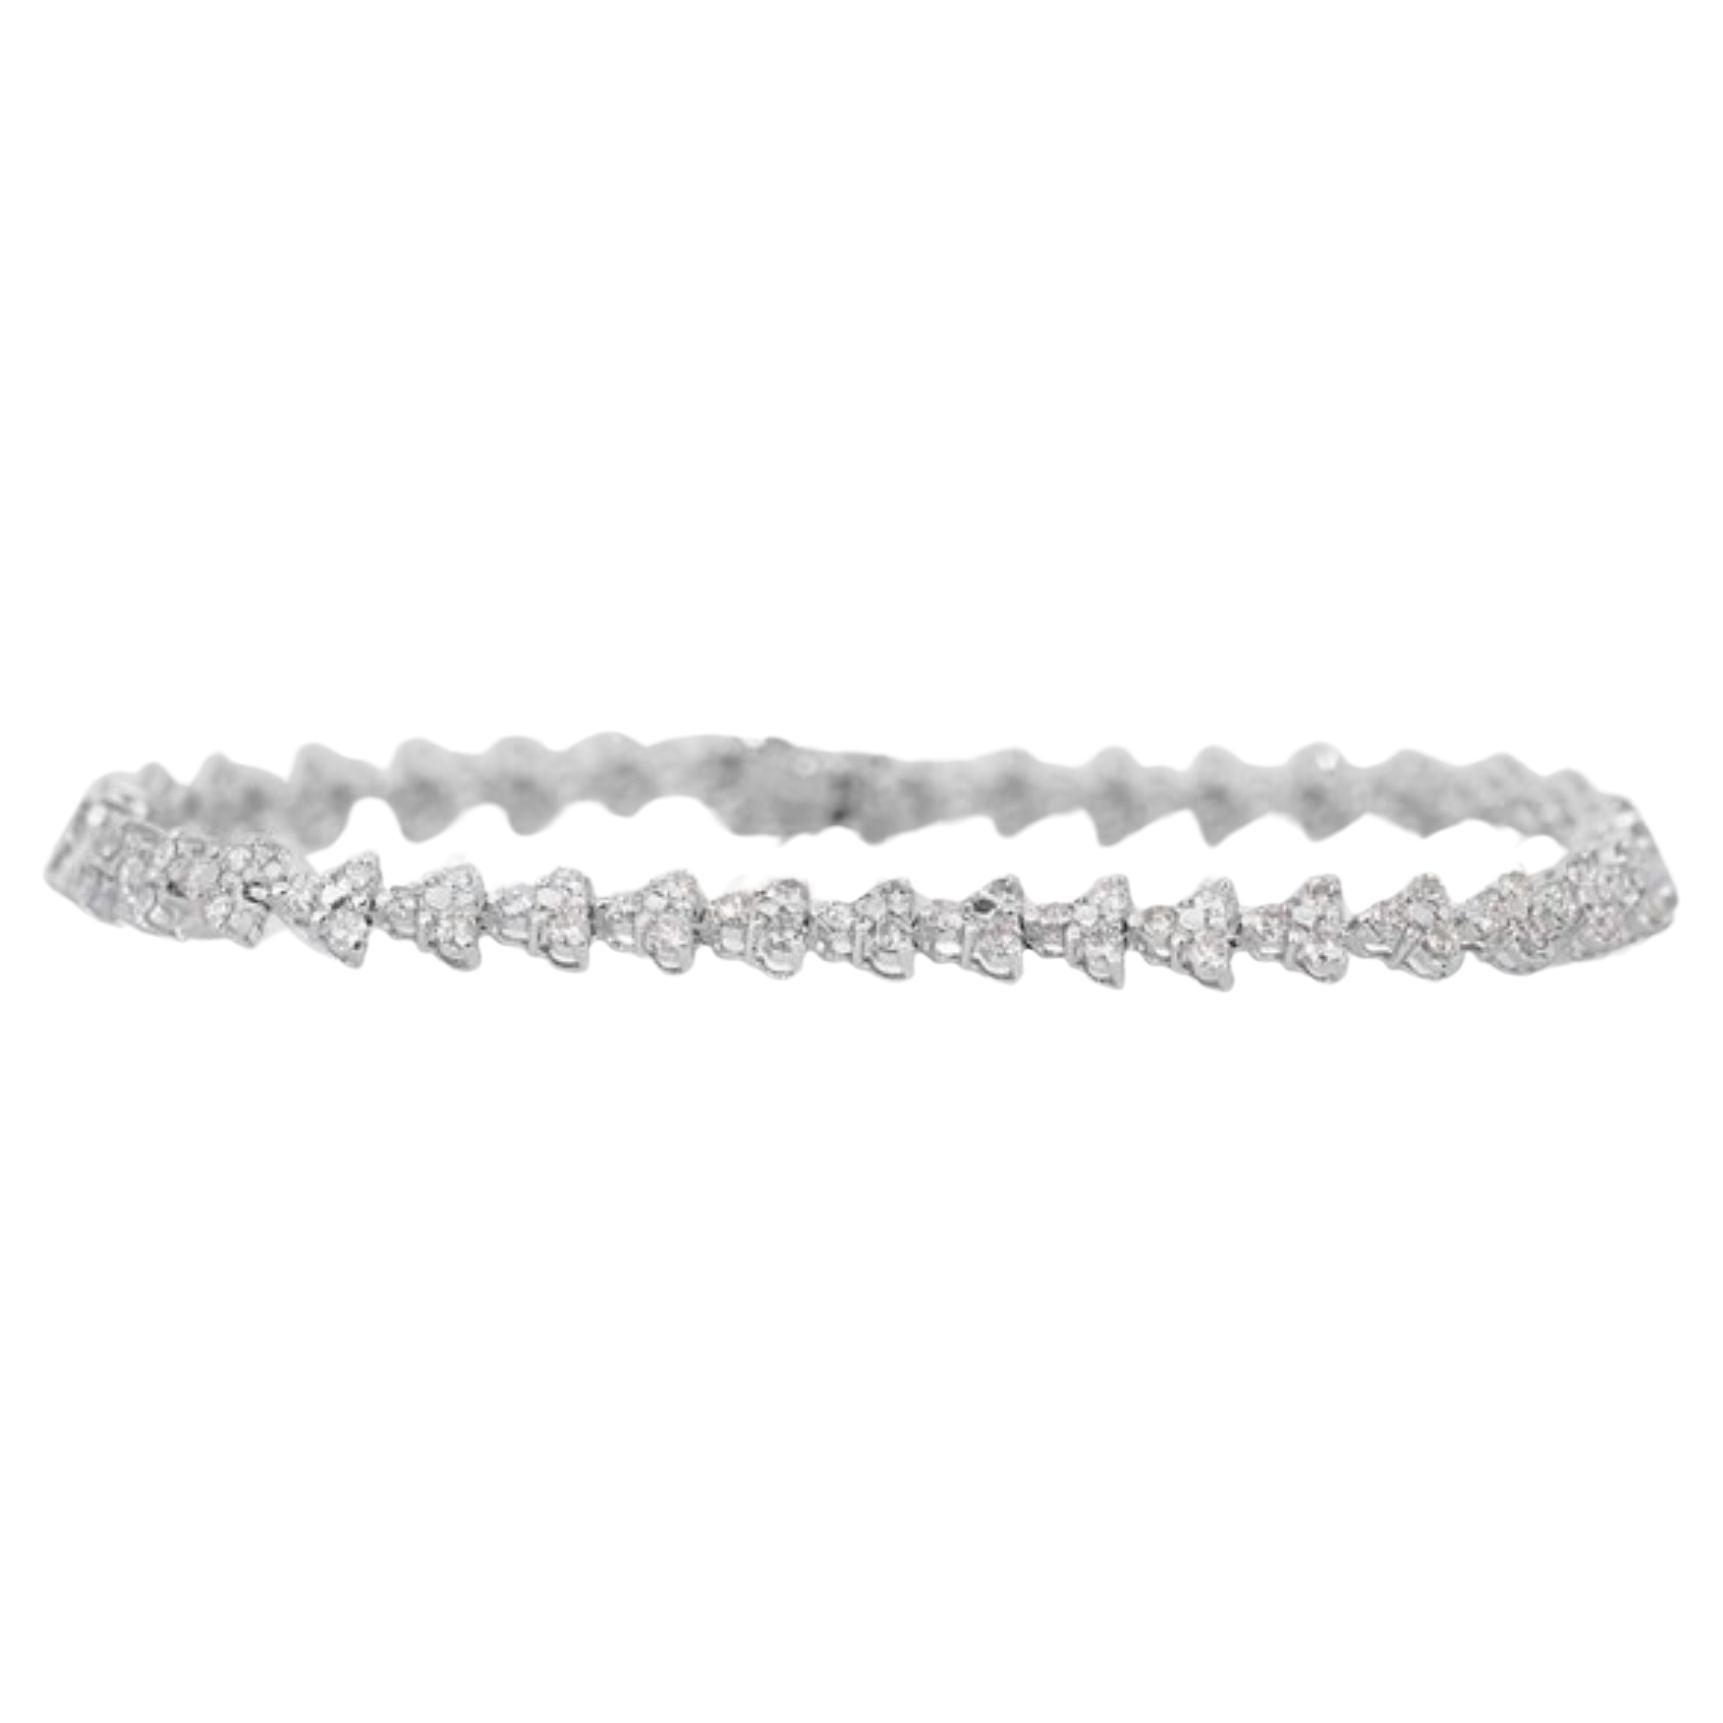 Exquisite 3.75ct Round Diamond Bracelet set in 14K White Gold